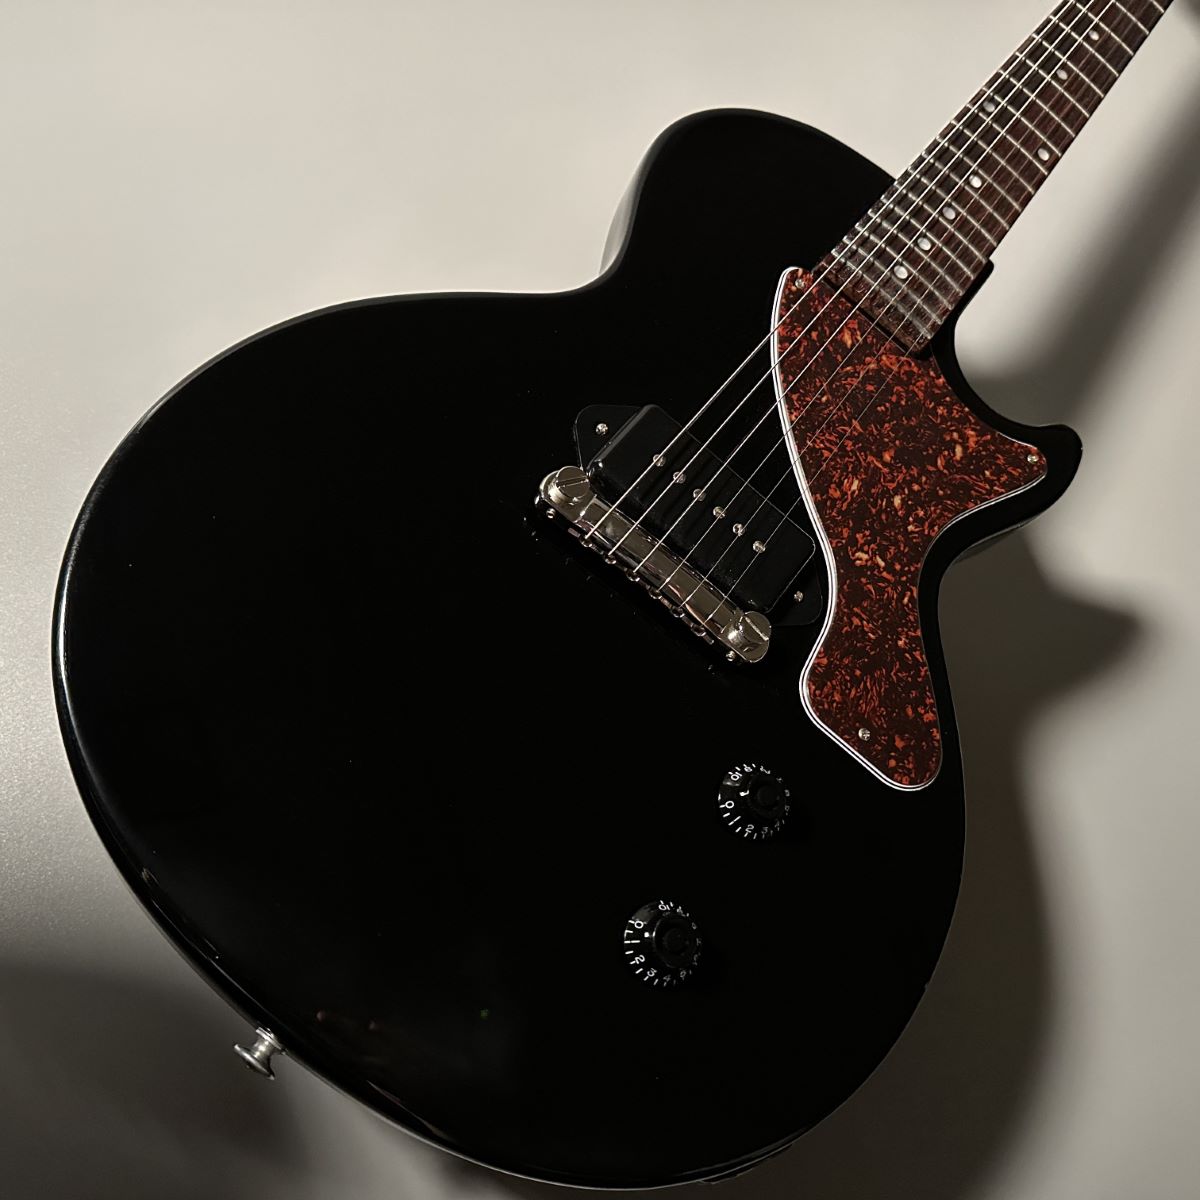 EPIPHONE by Gibson Les Paul junior Jr 黒rizgt楽器 - ギター